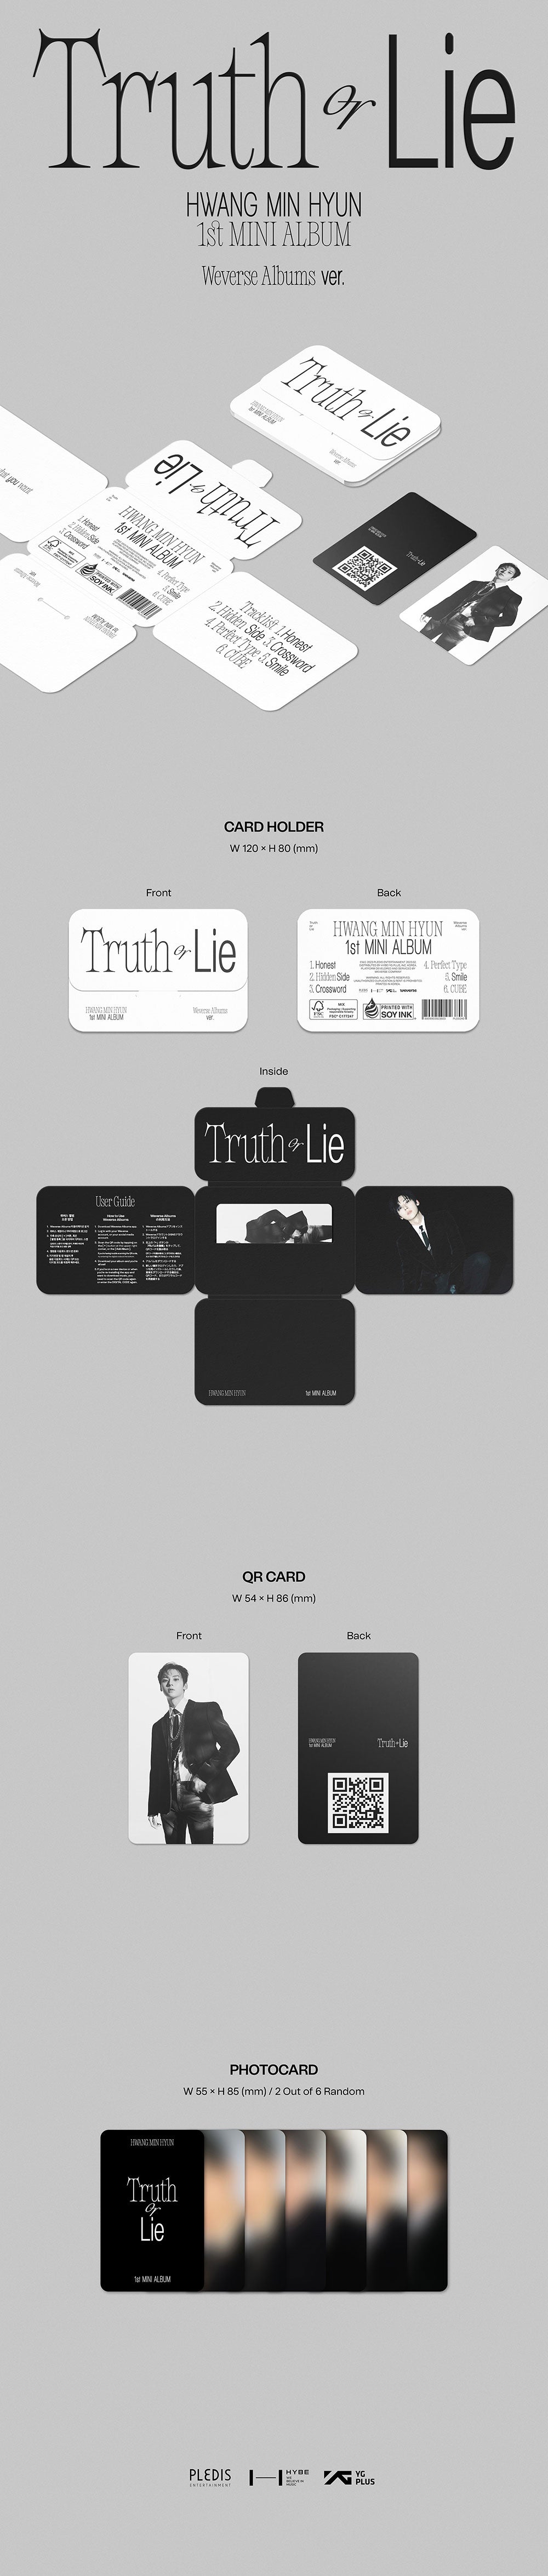 Hwang Min Hyun - Truth or Lie [1st Mini Album - Weverse Ver.]